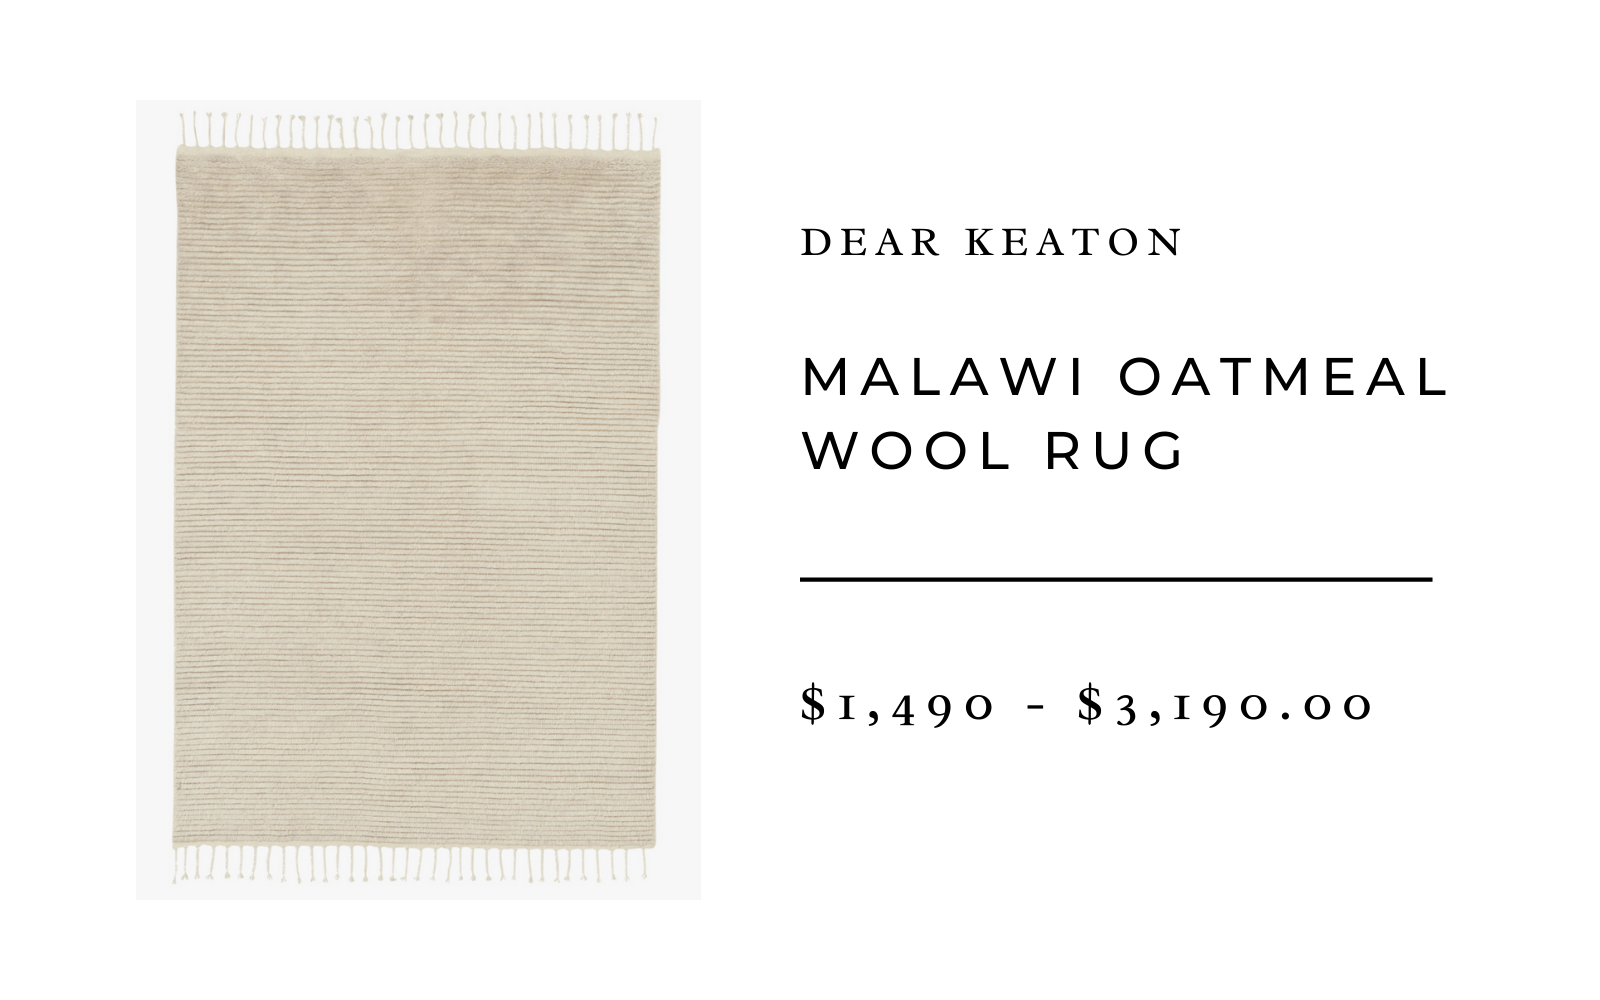 Dear Keaton Malawi Oatmeal Wool Rug